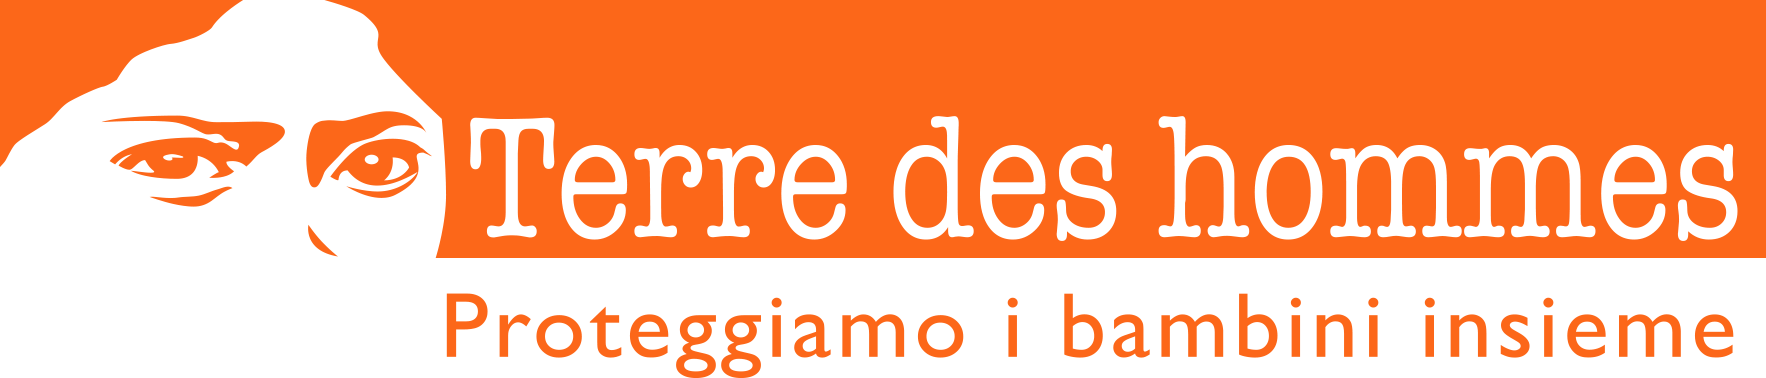 Logo-tdh-arancione_vettorialePANTONE.png